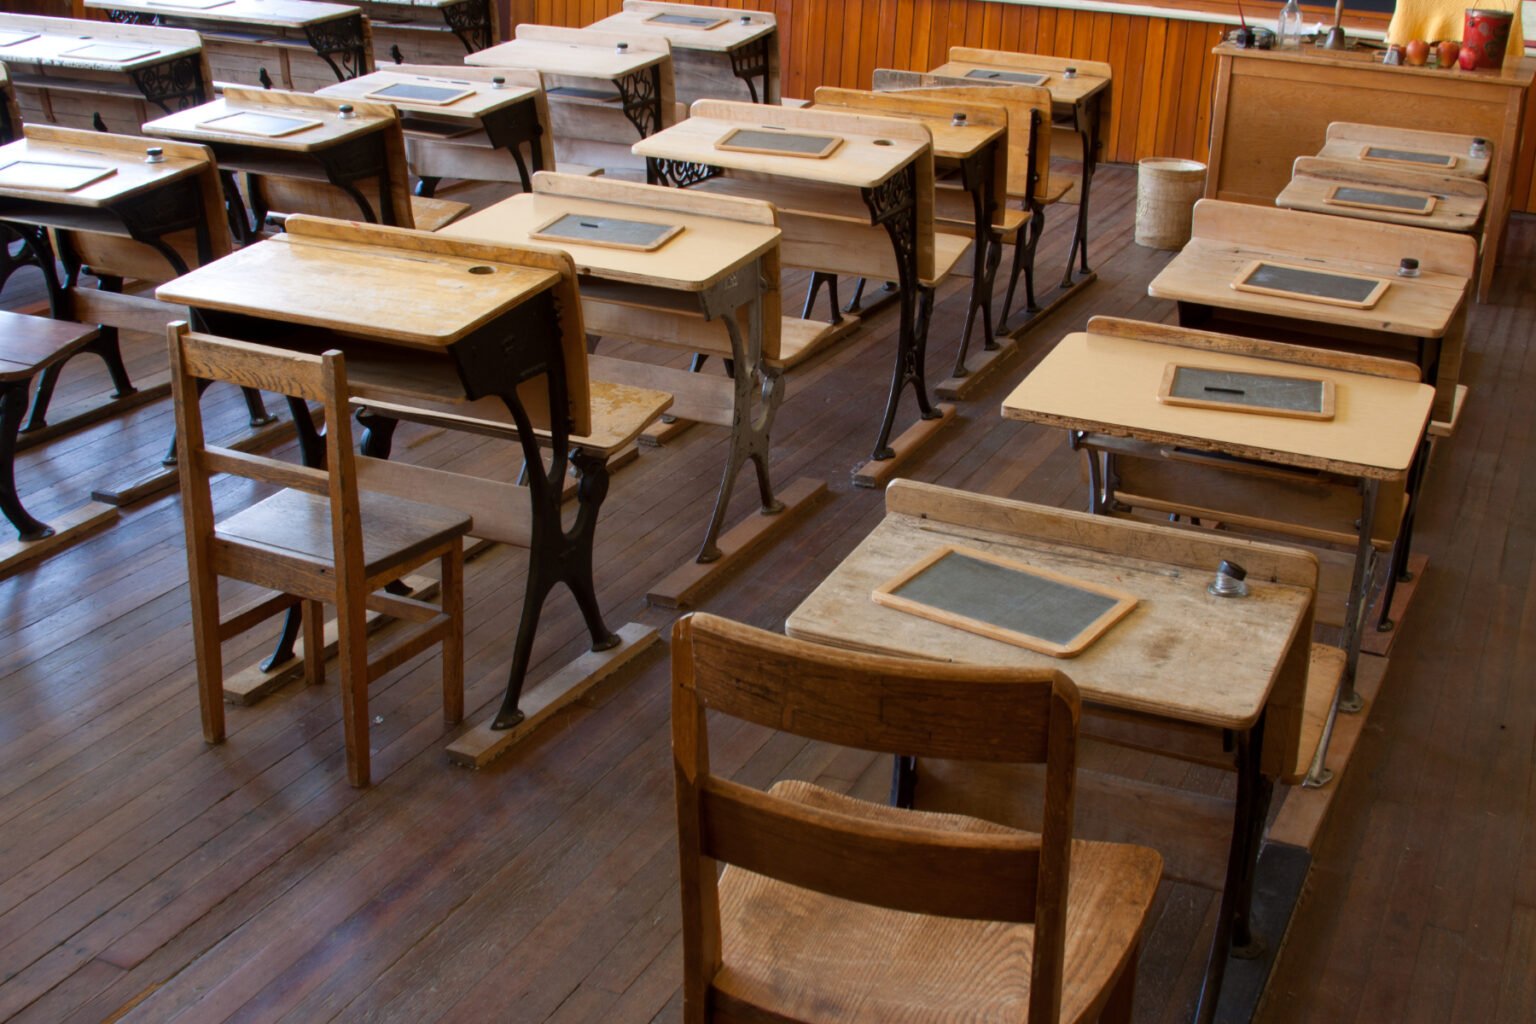 Antique School Desks With Detached Chairs 1536x1024 